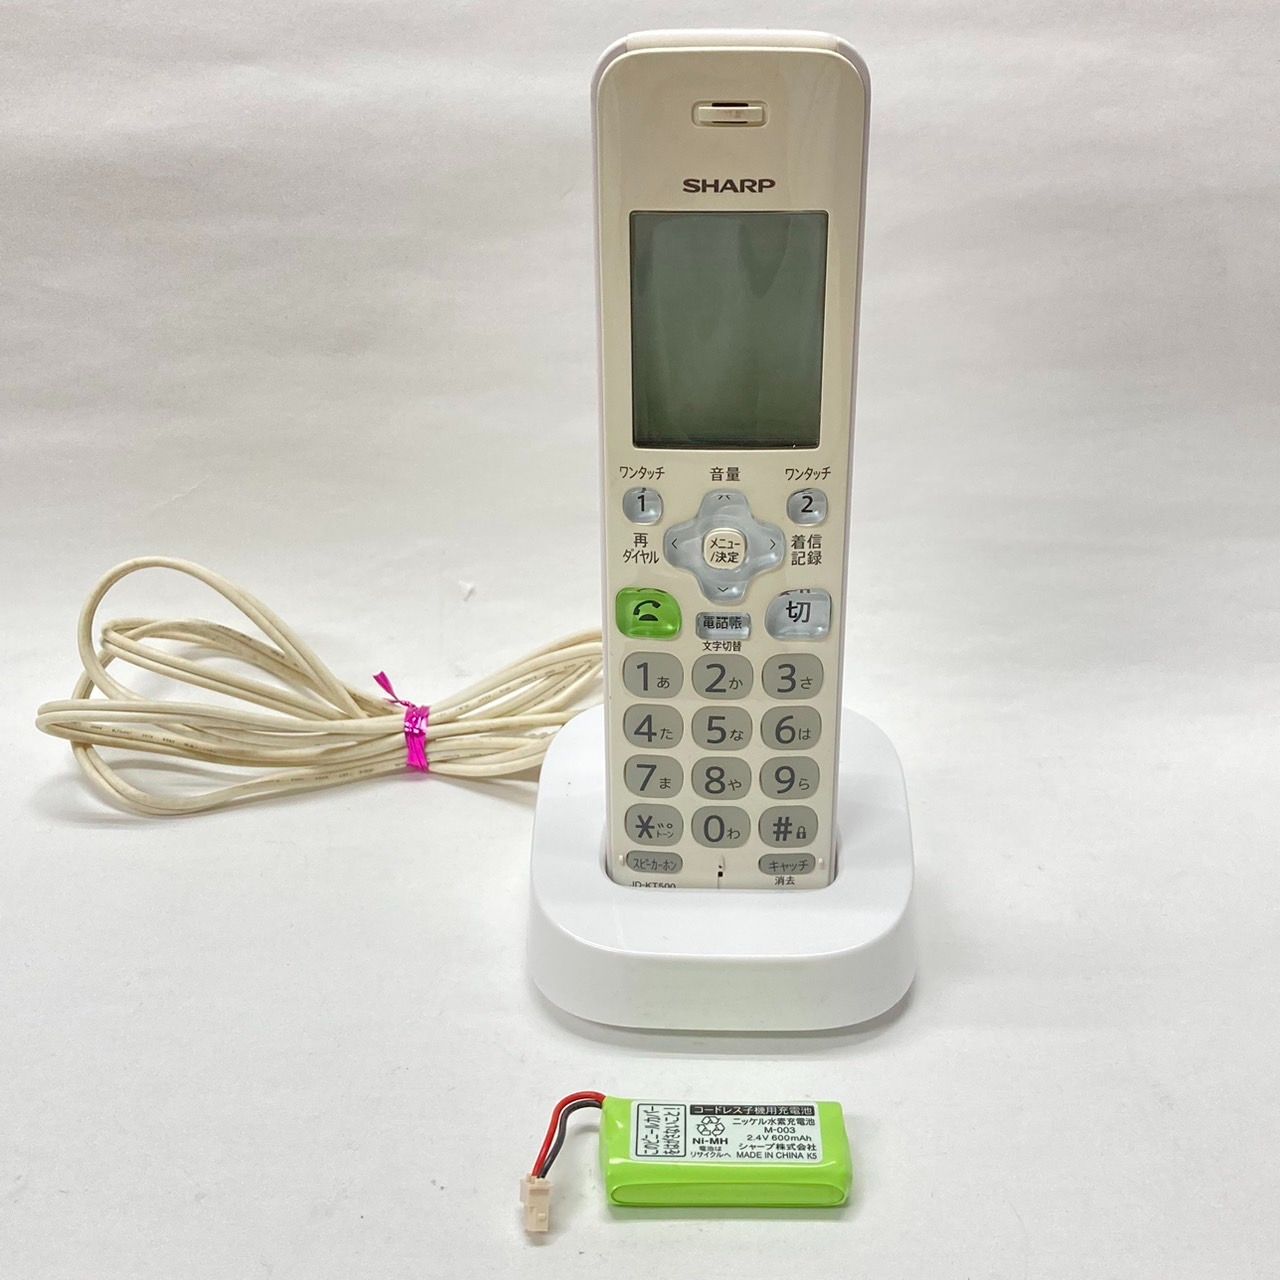 SHARP シャープ コードレス電話機 JD-AT85C 振り込め詐欺対策機能